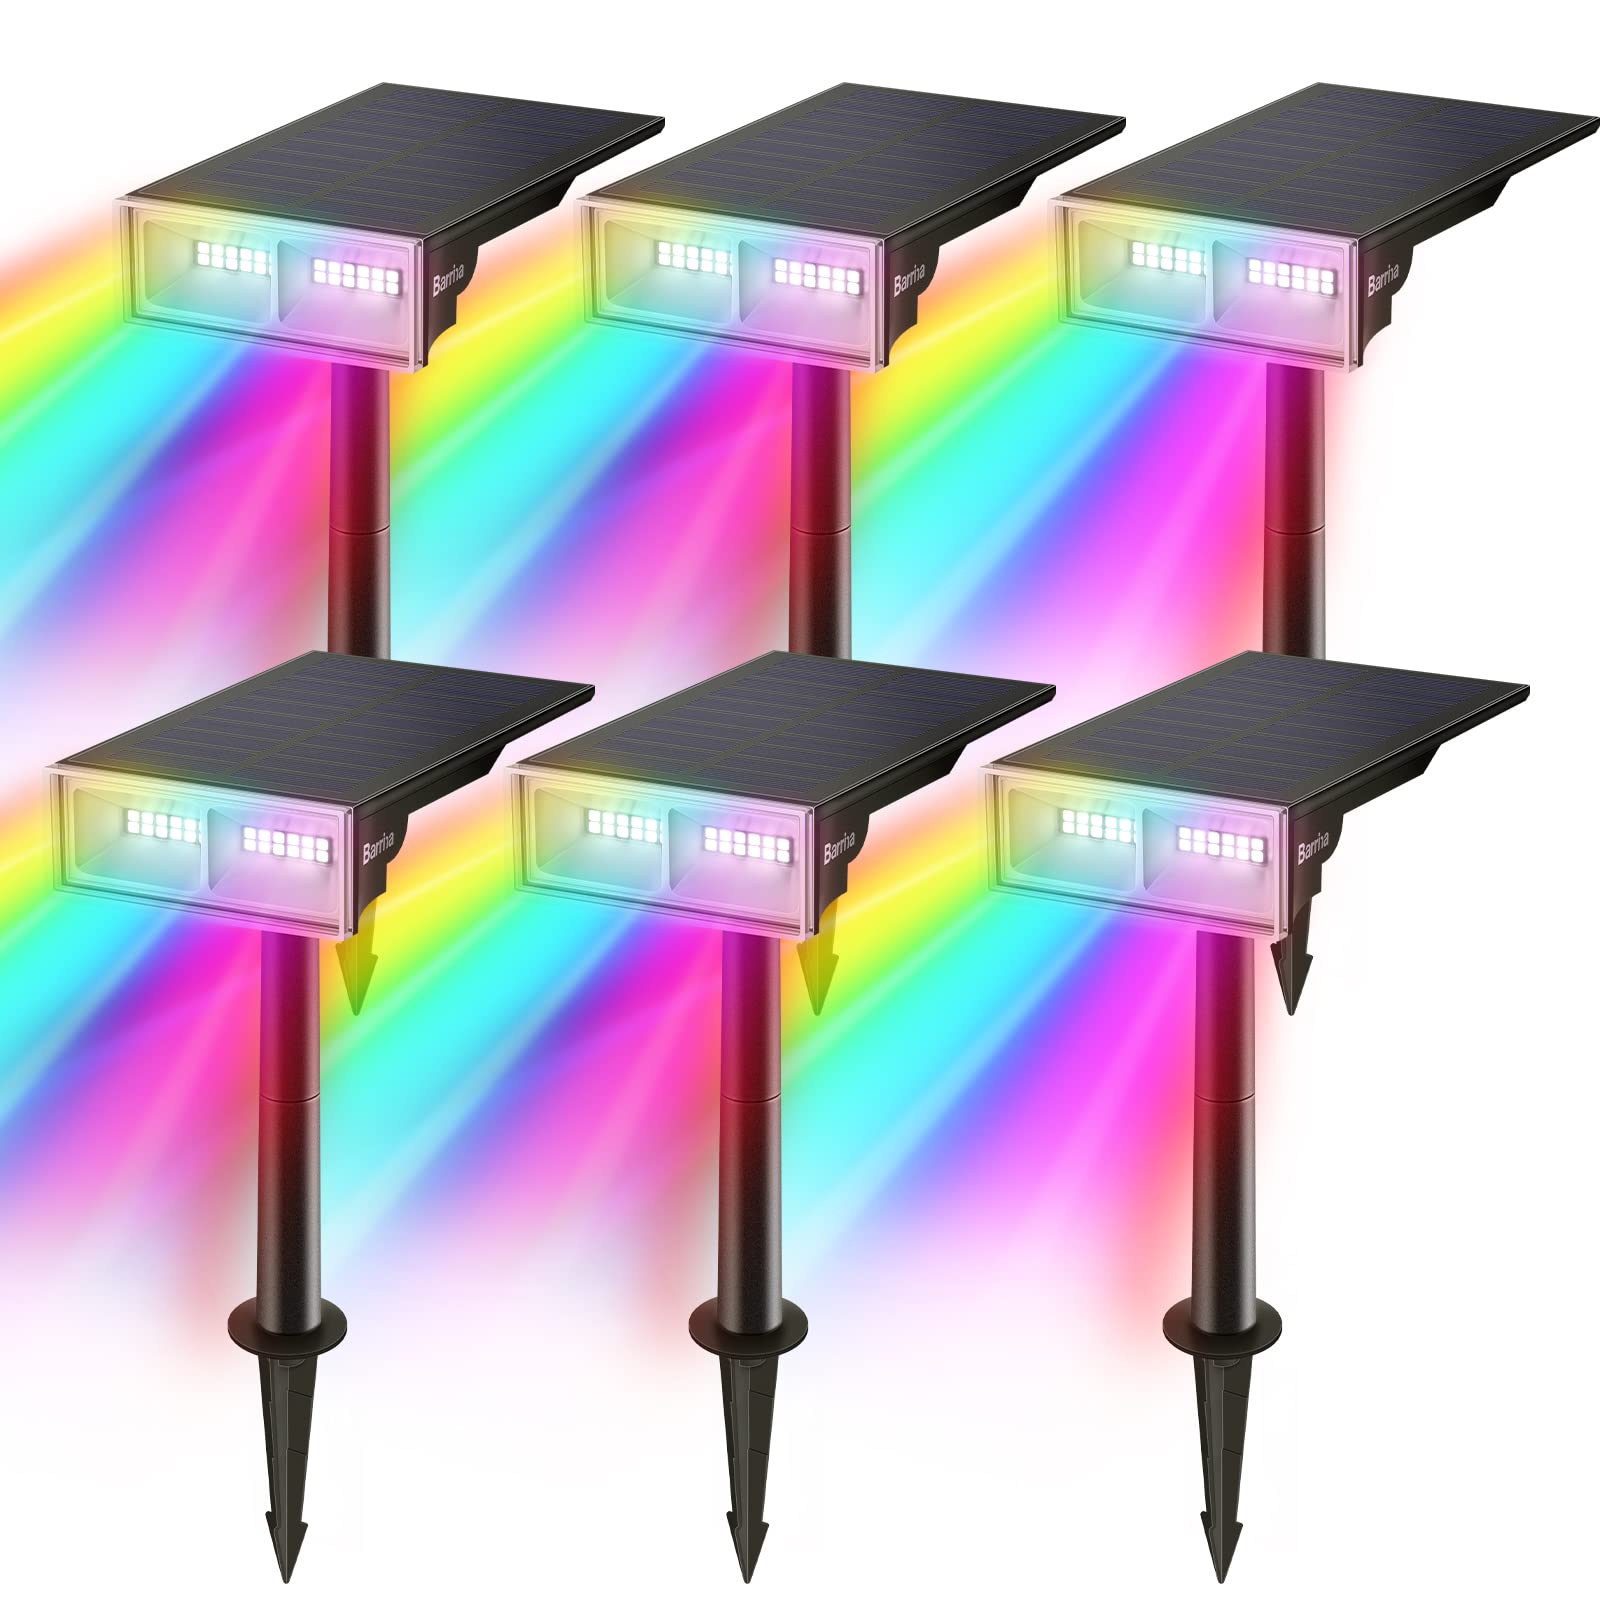 Solar Spot Lights,RGB 8 Colorful Modes,Auto ON/OFF,24 LEDs,6 Packs,TYN RGB 6